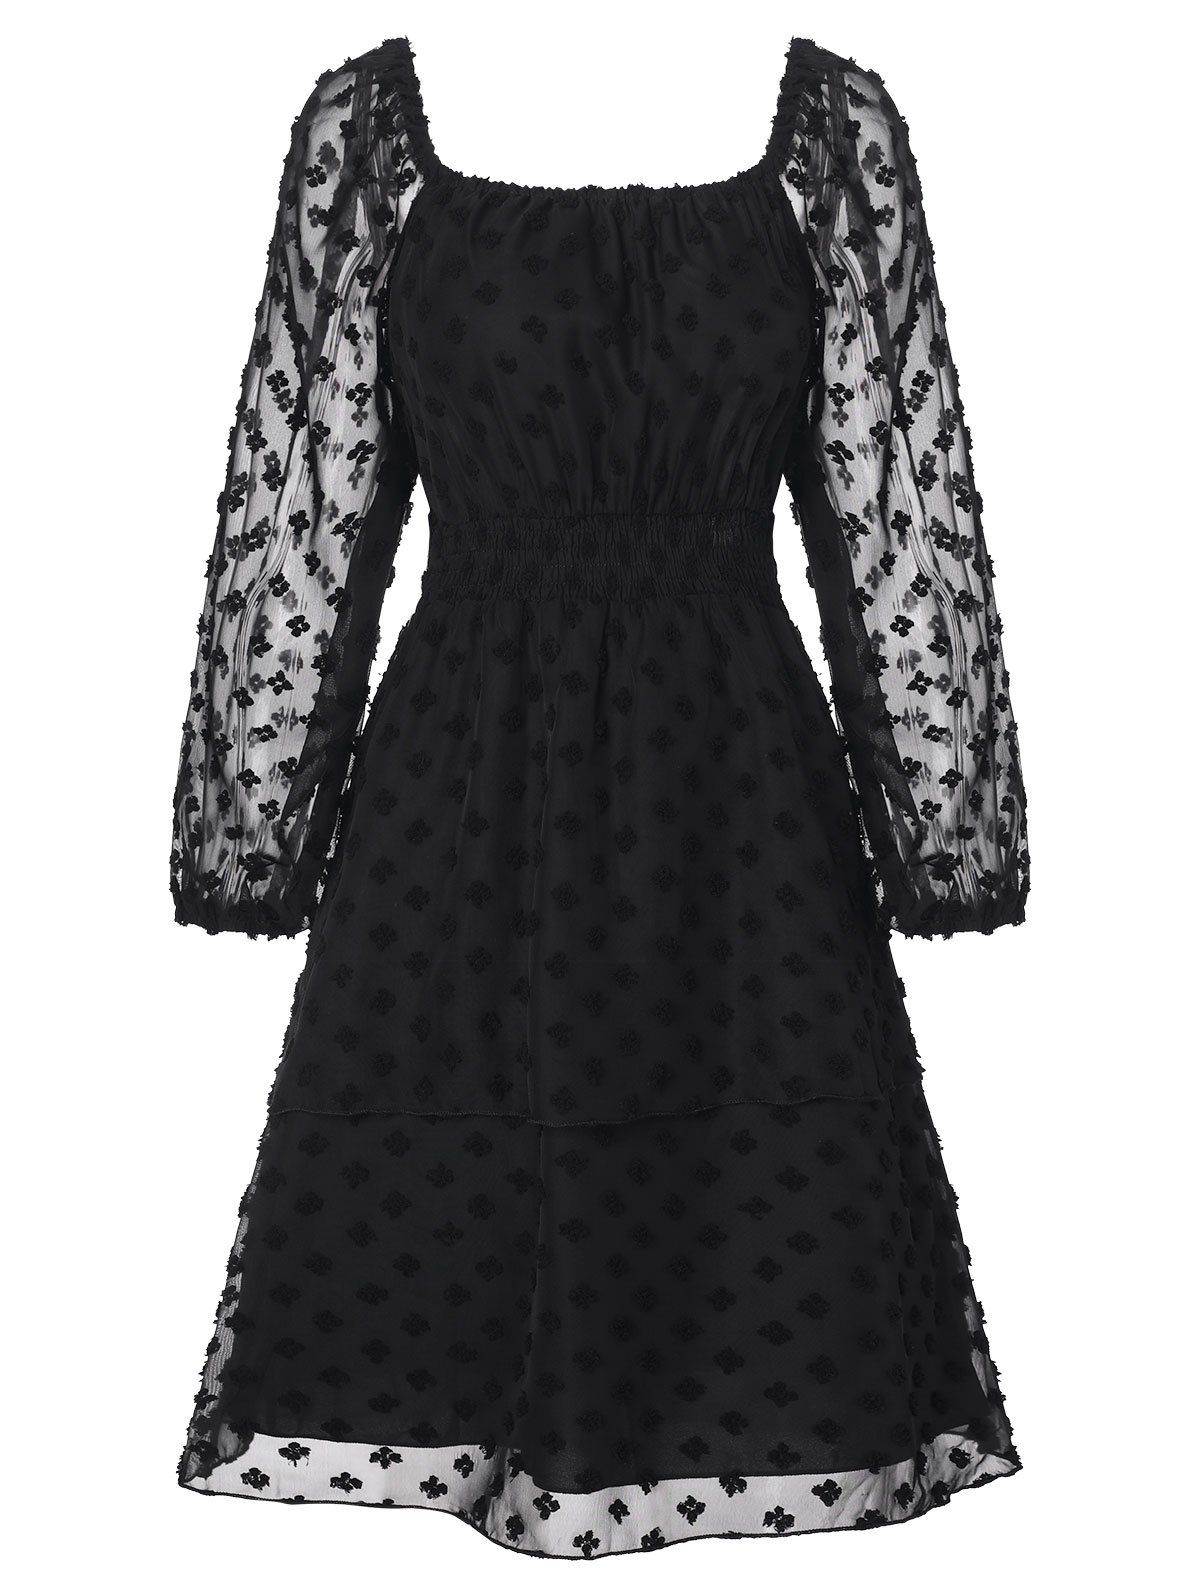 Swiss Dot Chiffon Mini Dress Layered Tie Back Cutout A Line Dress High Waist Long Sleeve Dress - BLACK L